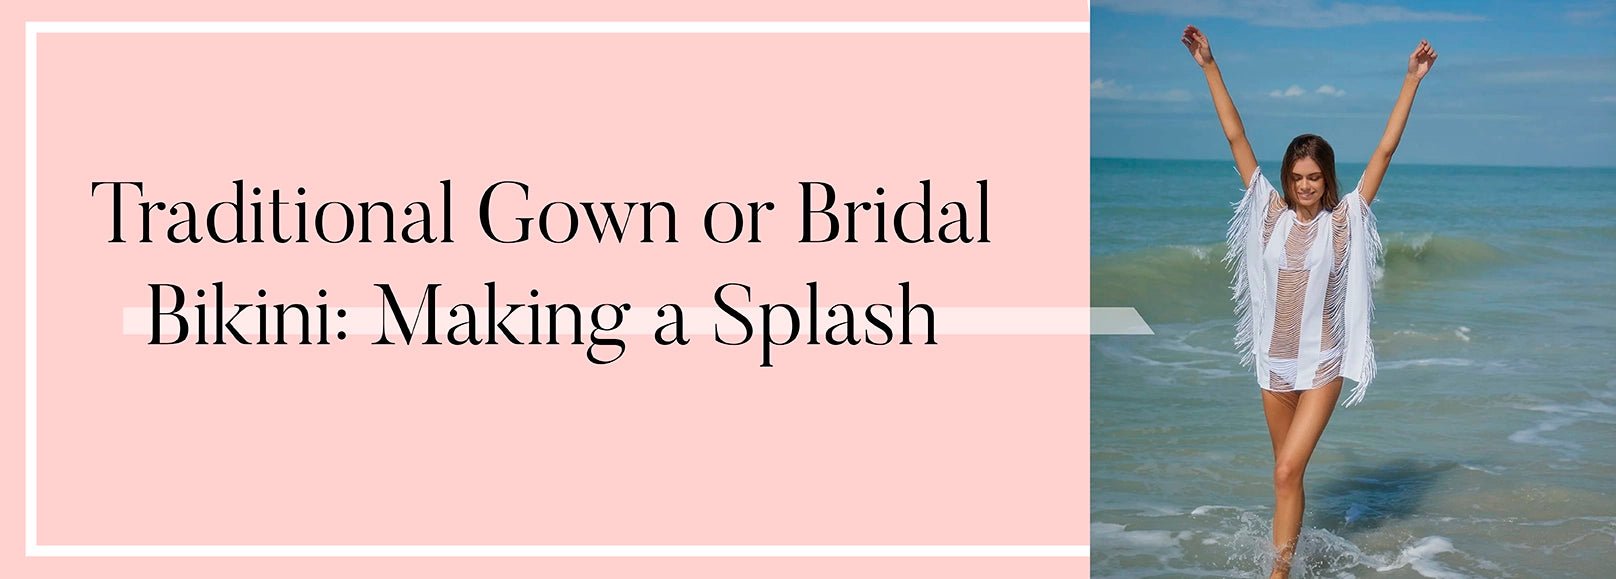 Traditional Gown or Bridal Bikini: Making a Splash